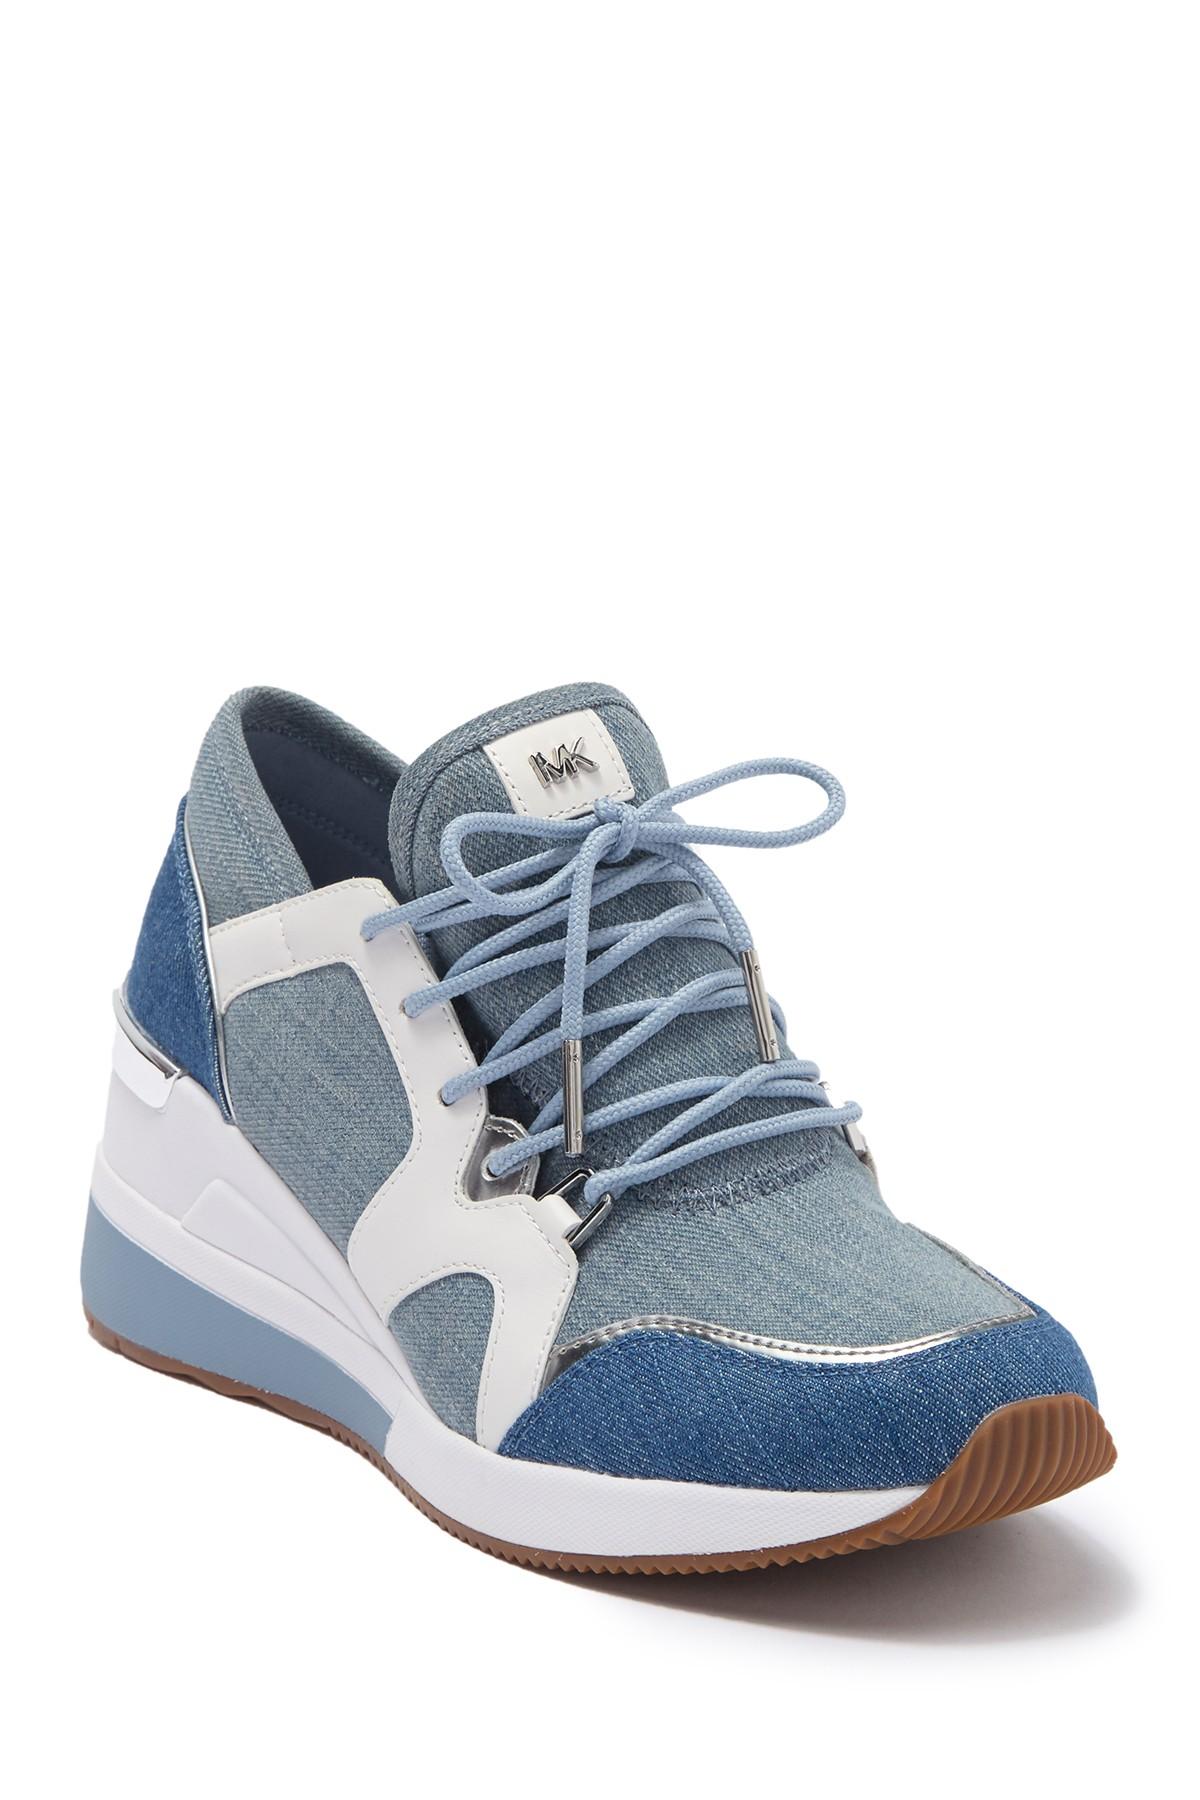 MICHAEL Michael Kors Liv Trainer Wedge Sneaker in Blue |